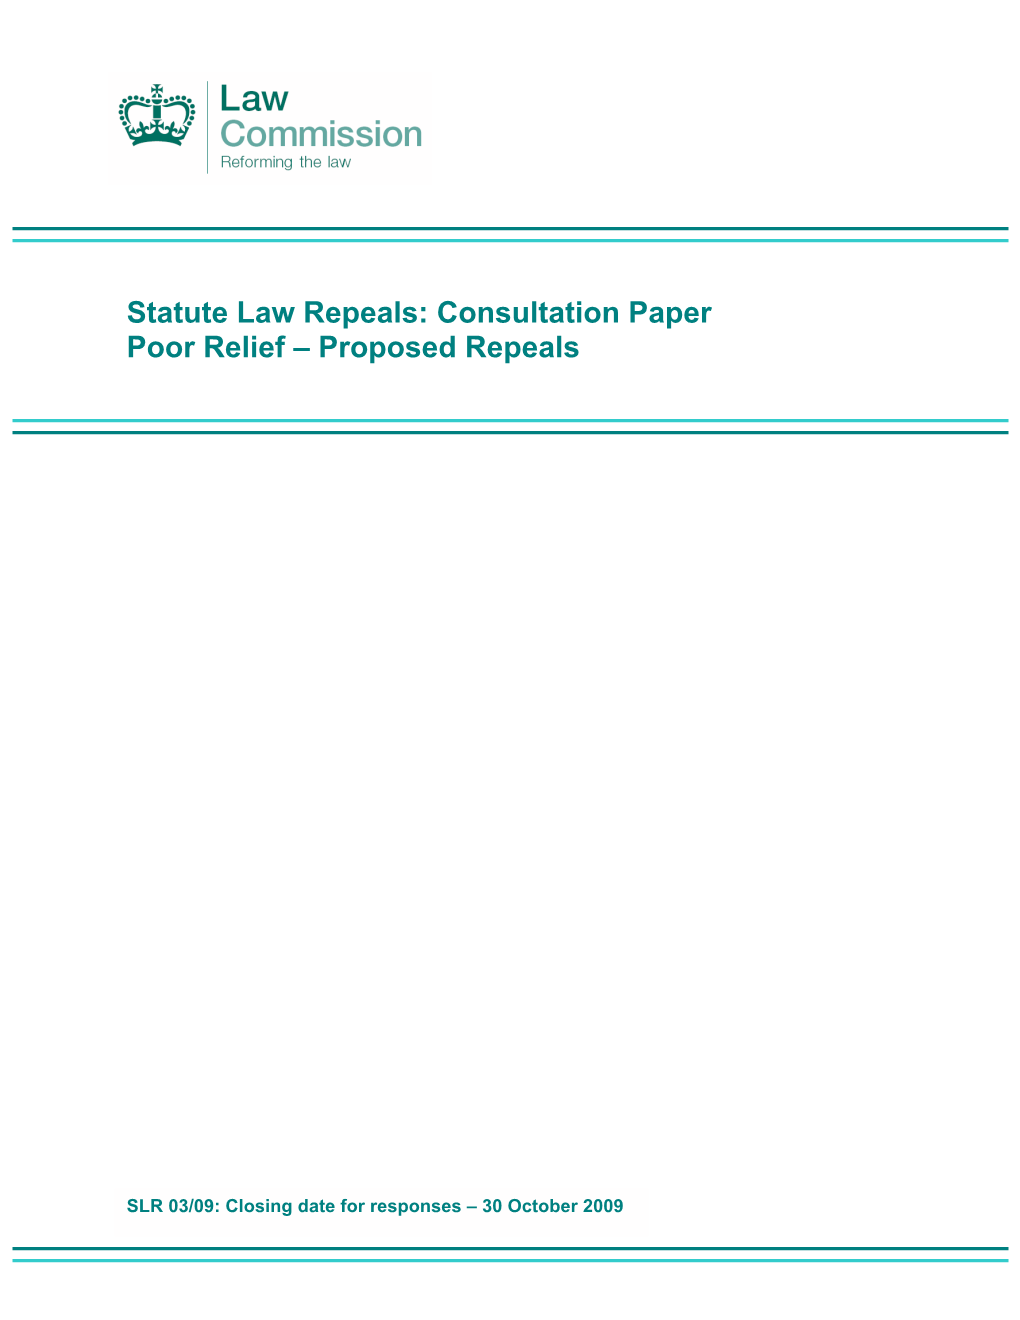 Consultation Paper Poor Relief – Proposed Repeals